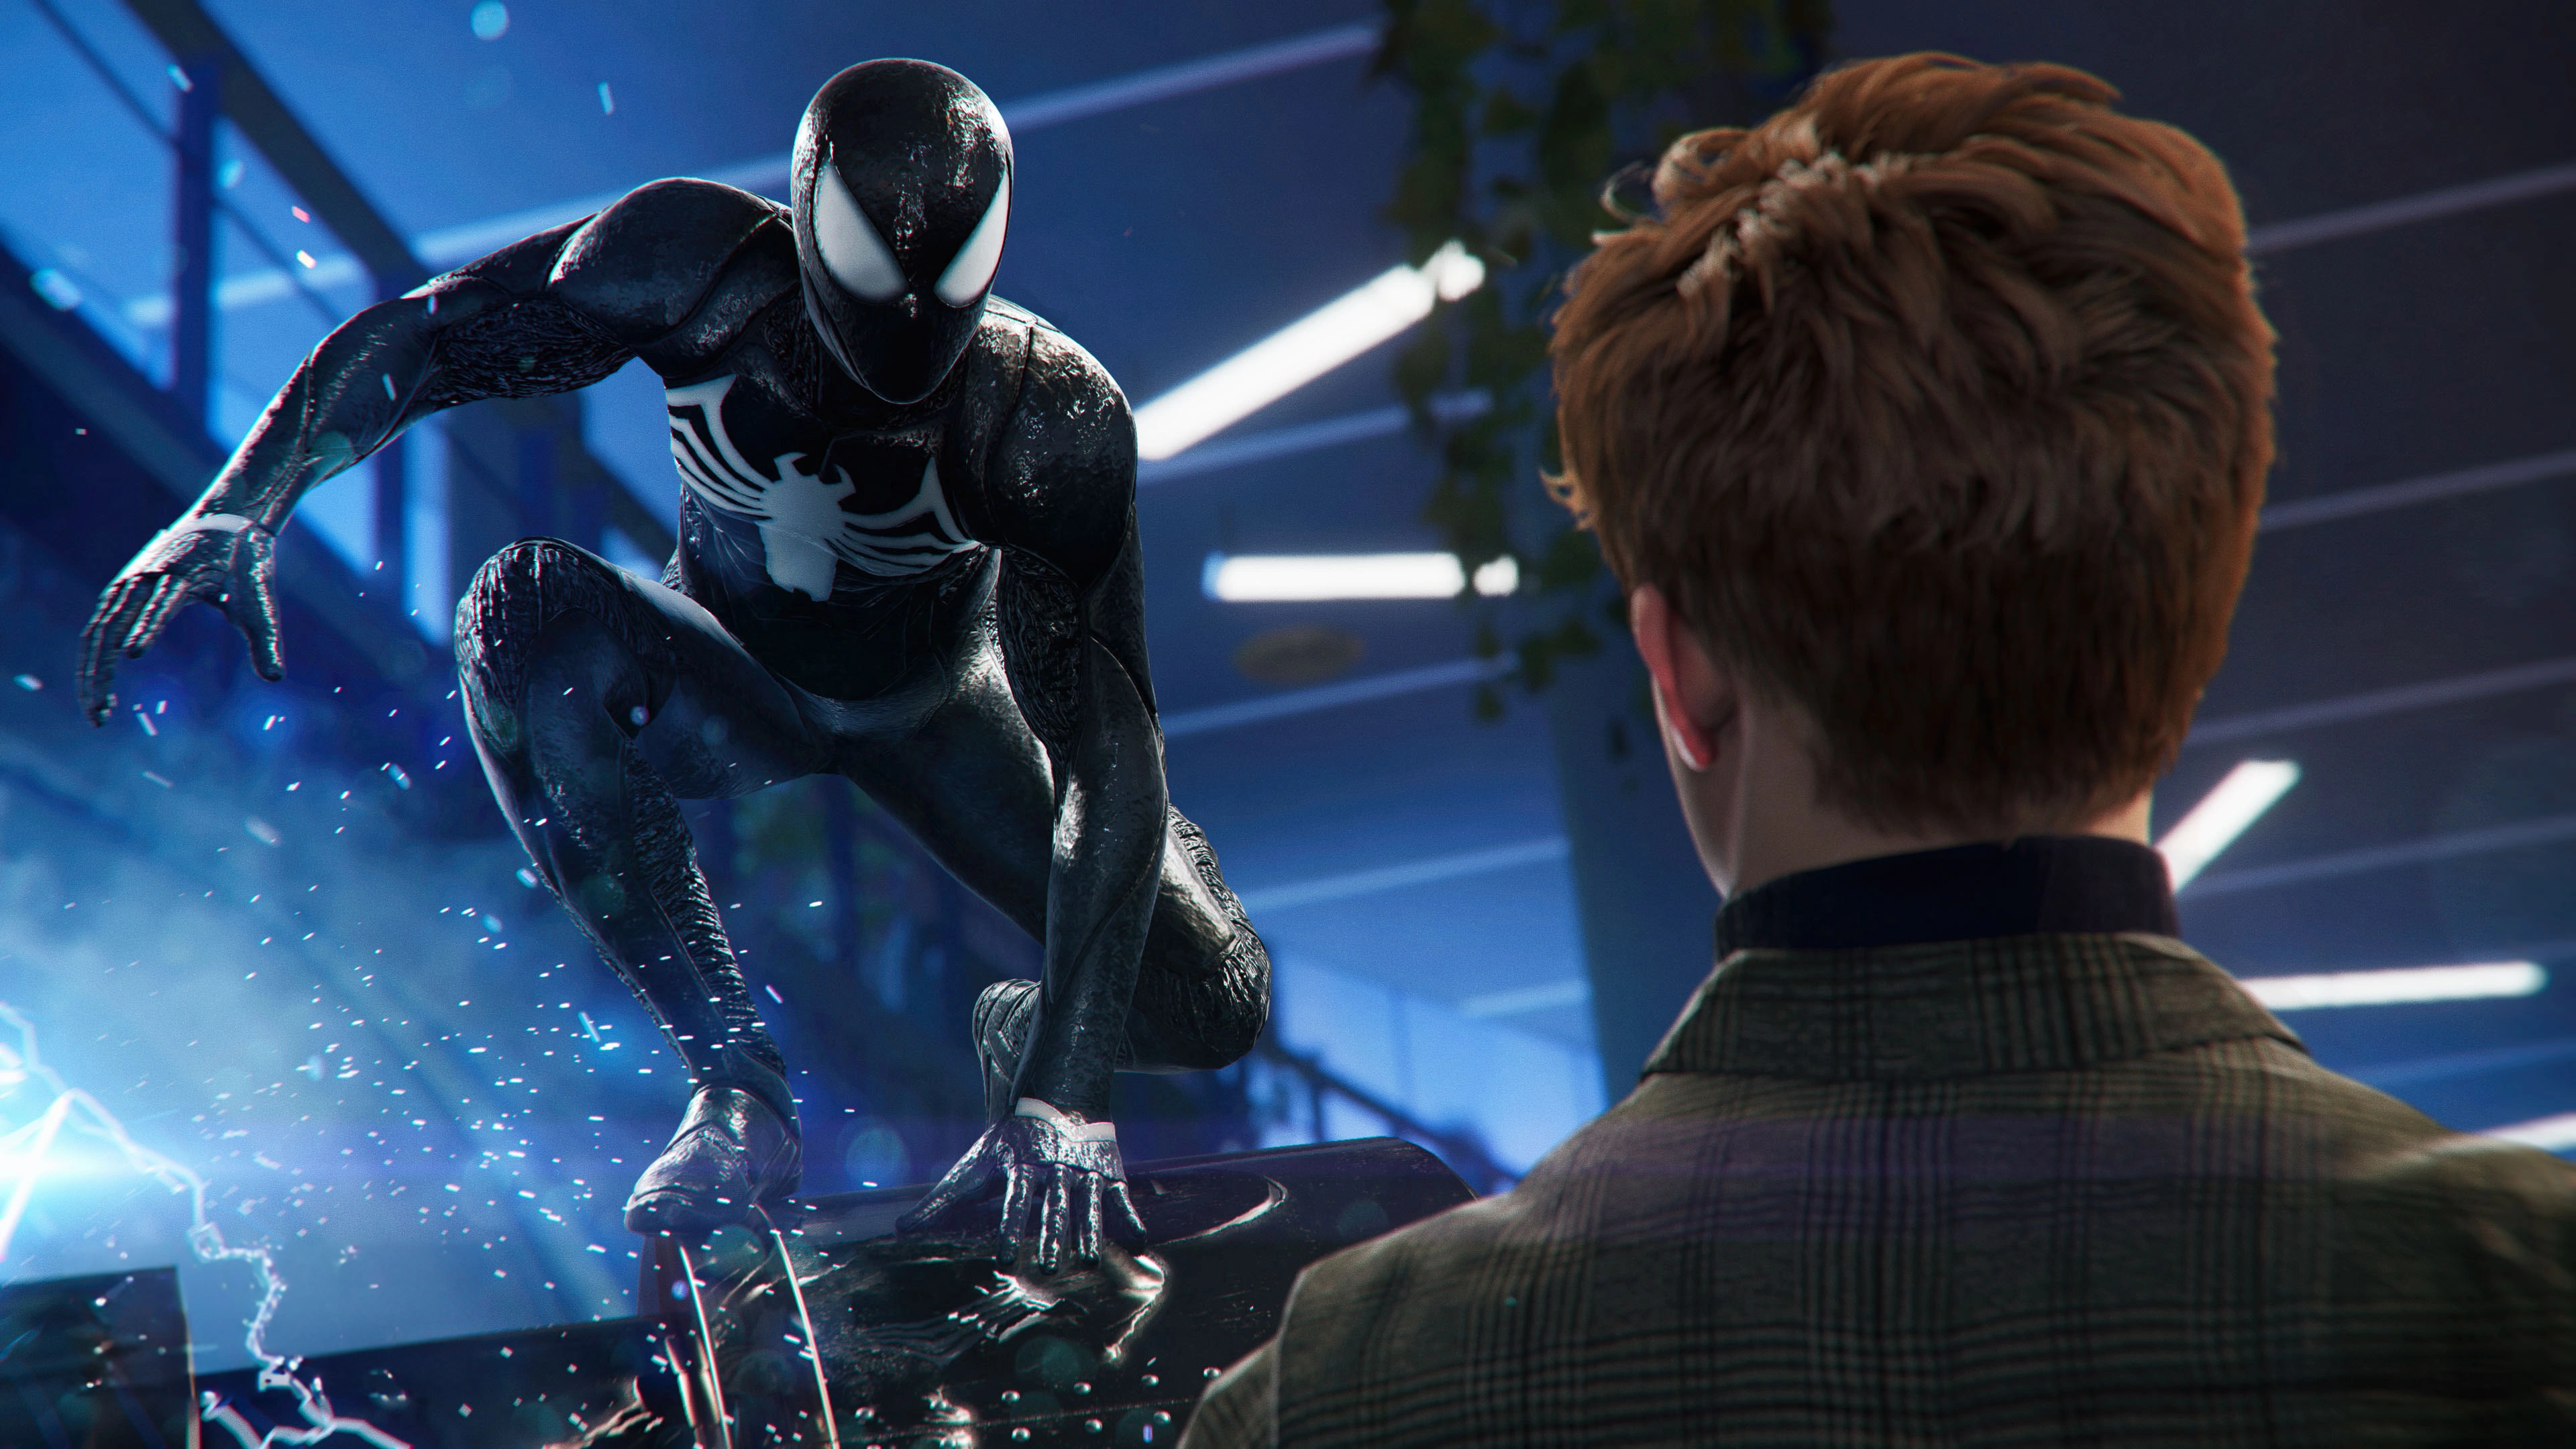 the symbiote suit spiderman 2 7l.jpg